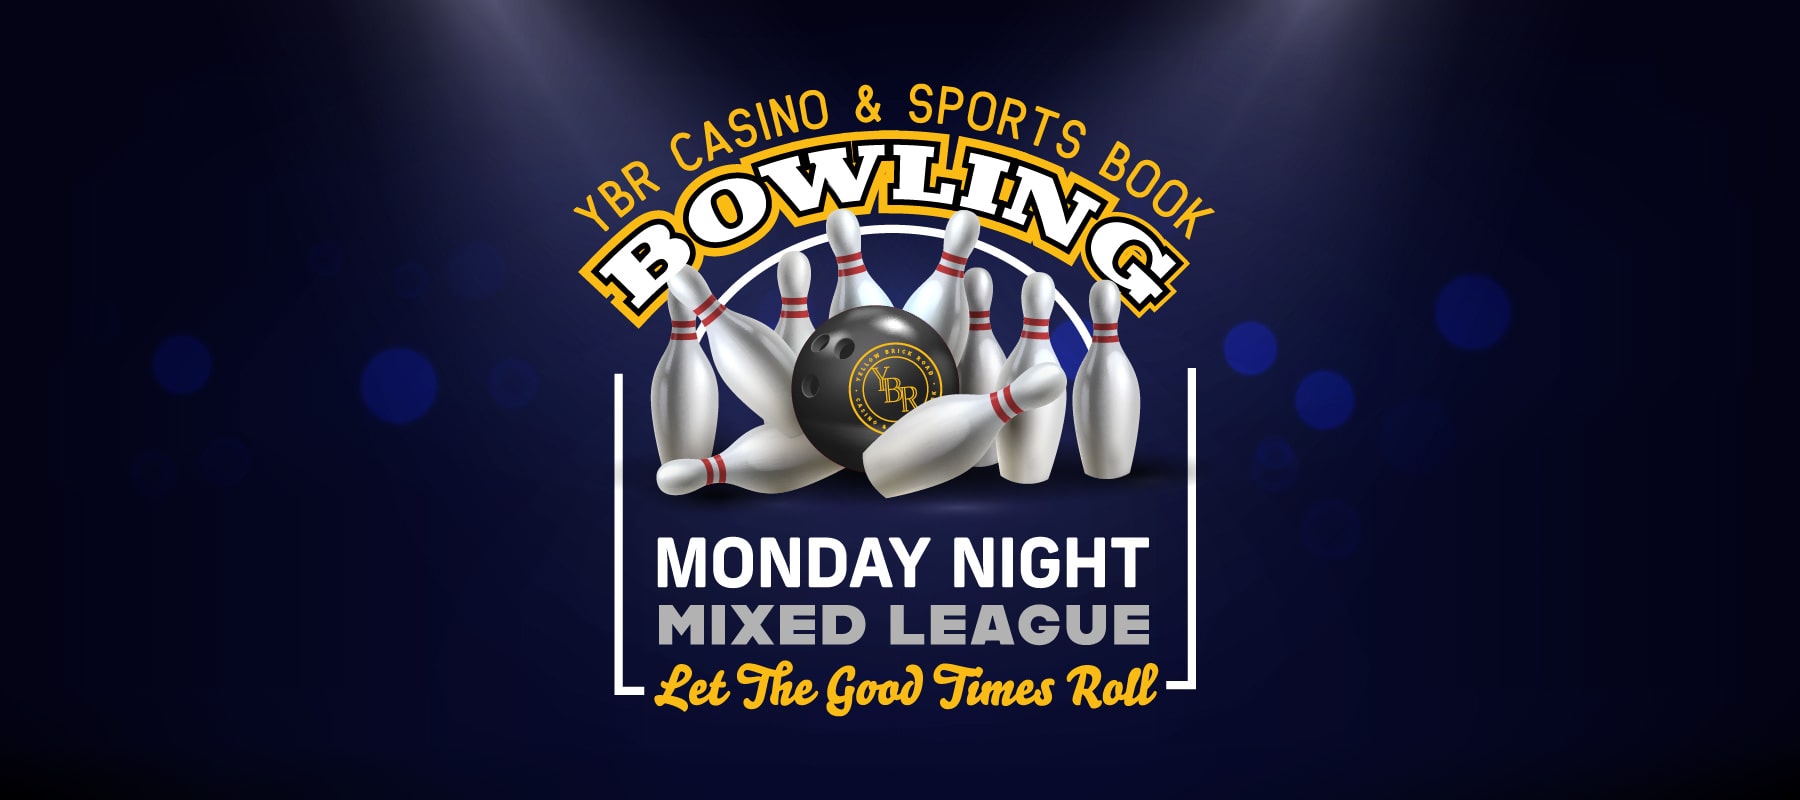 YBR Casino & Sports Book: Bowling - Monday Night Mixed League